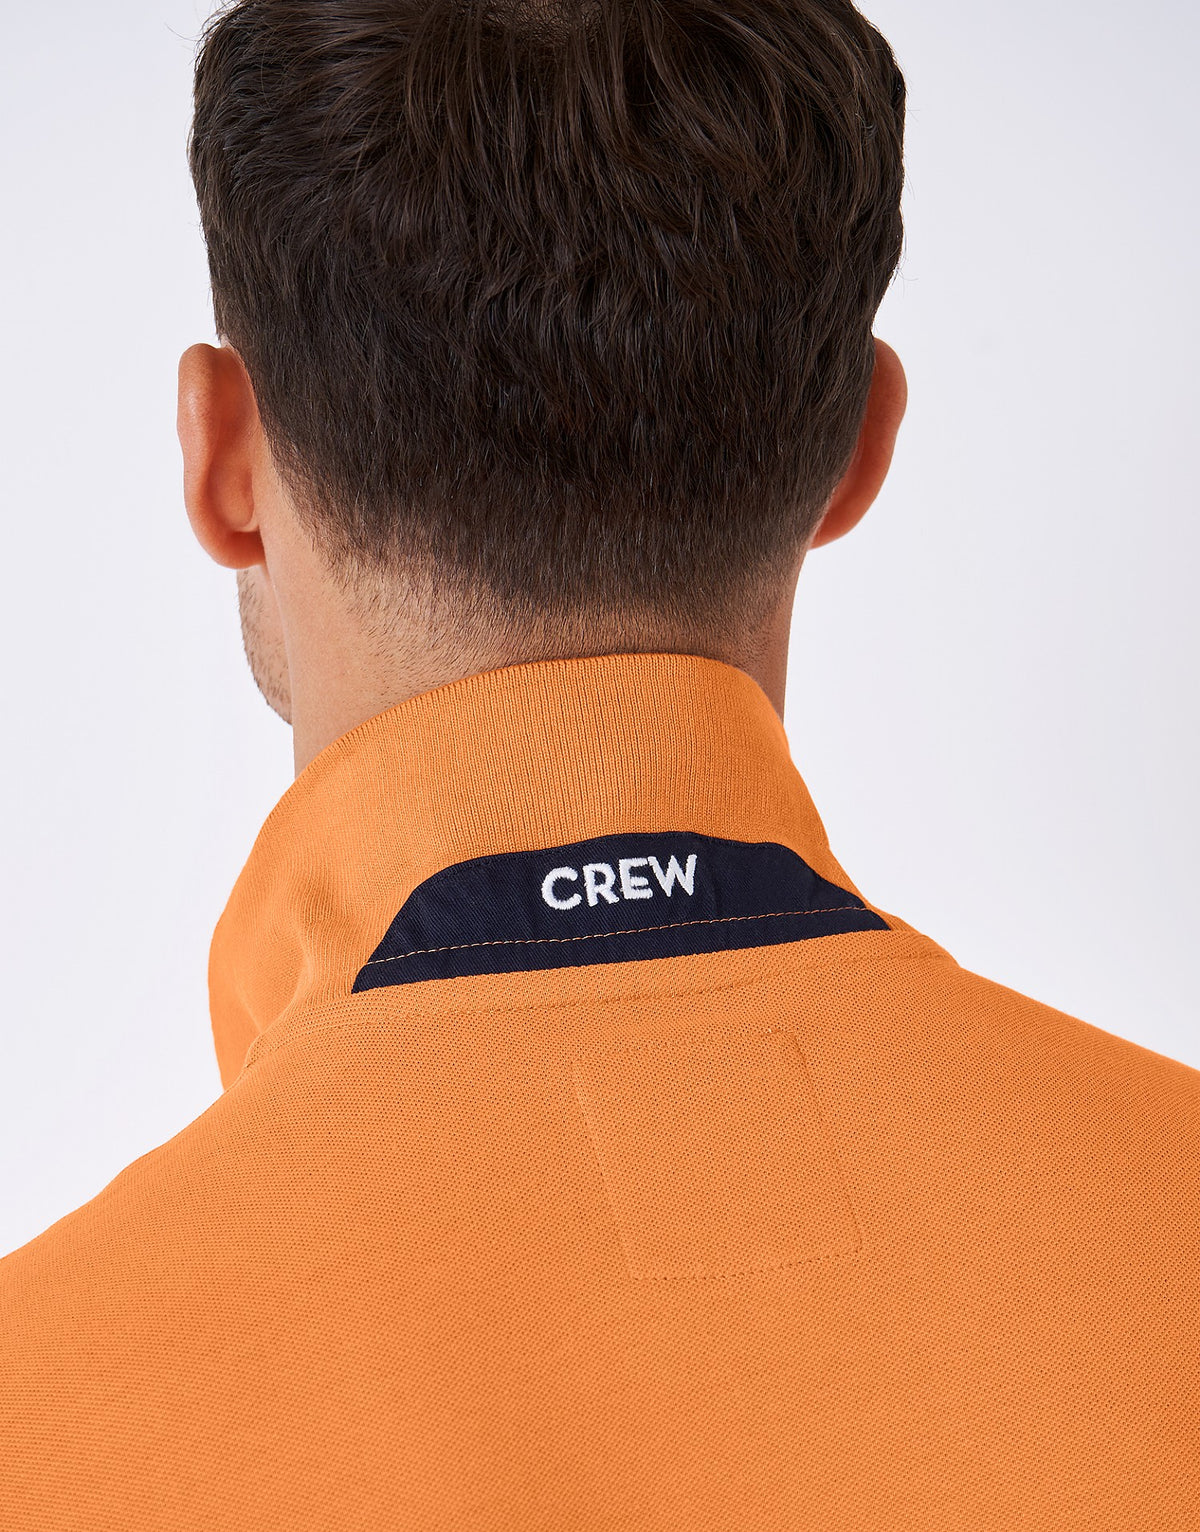 Crew Clothing Mens Pique Polo Shirt 'Classic Pique Polo' - Short Sleeved, 03, Mke002, Coral Rose